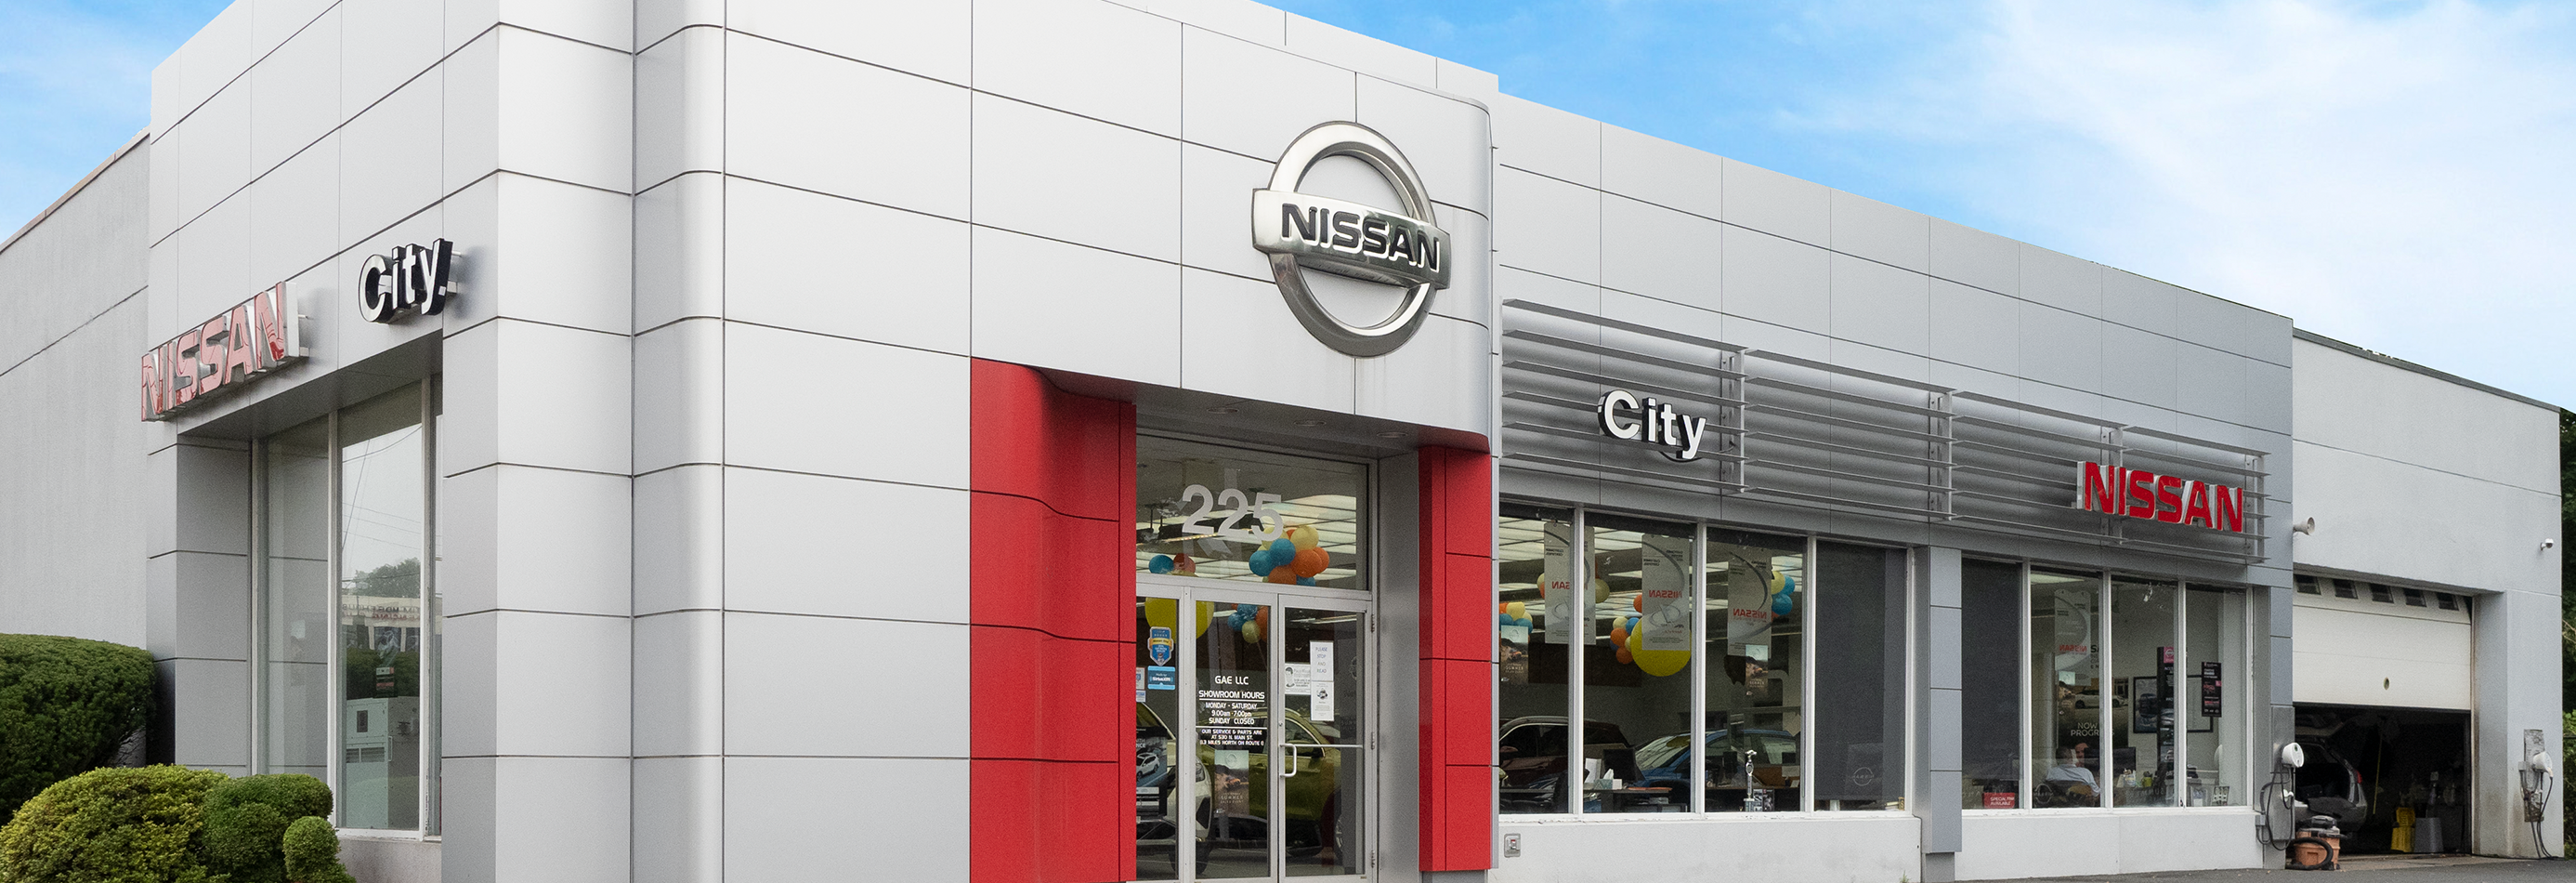 Nissan City serving Portchester NY